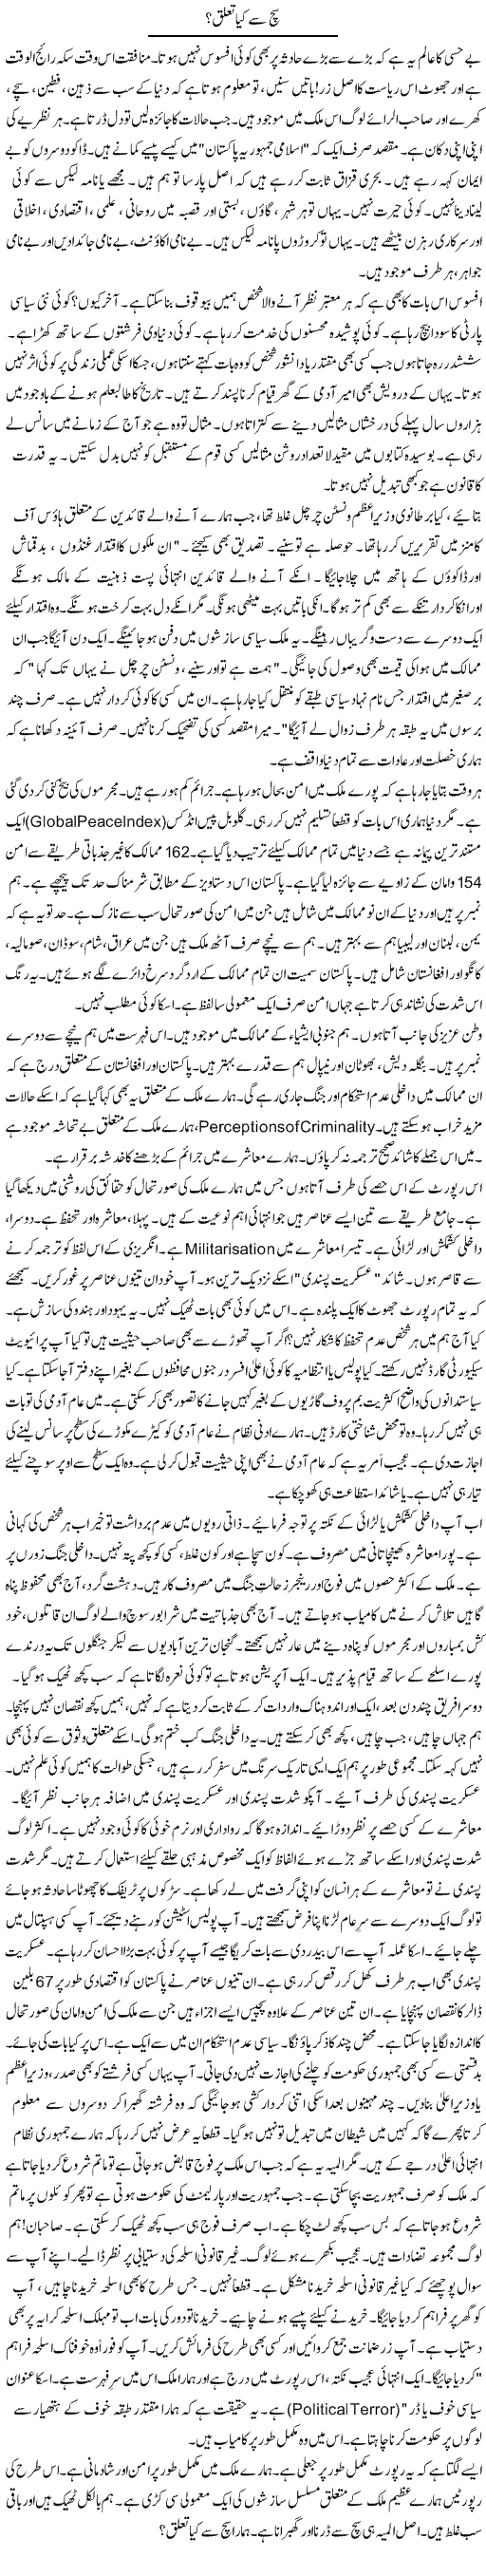 Sach Se Kia Talluq? | Rao Manzar Hayat | Daily Urdu Columns